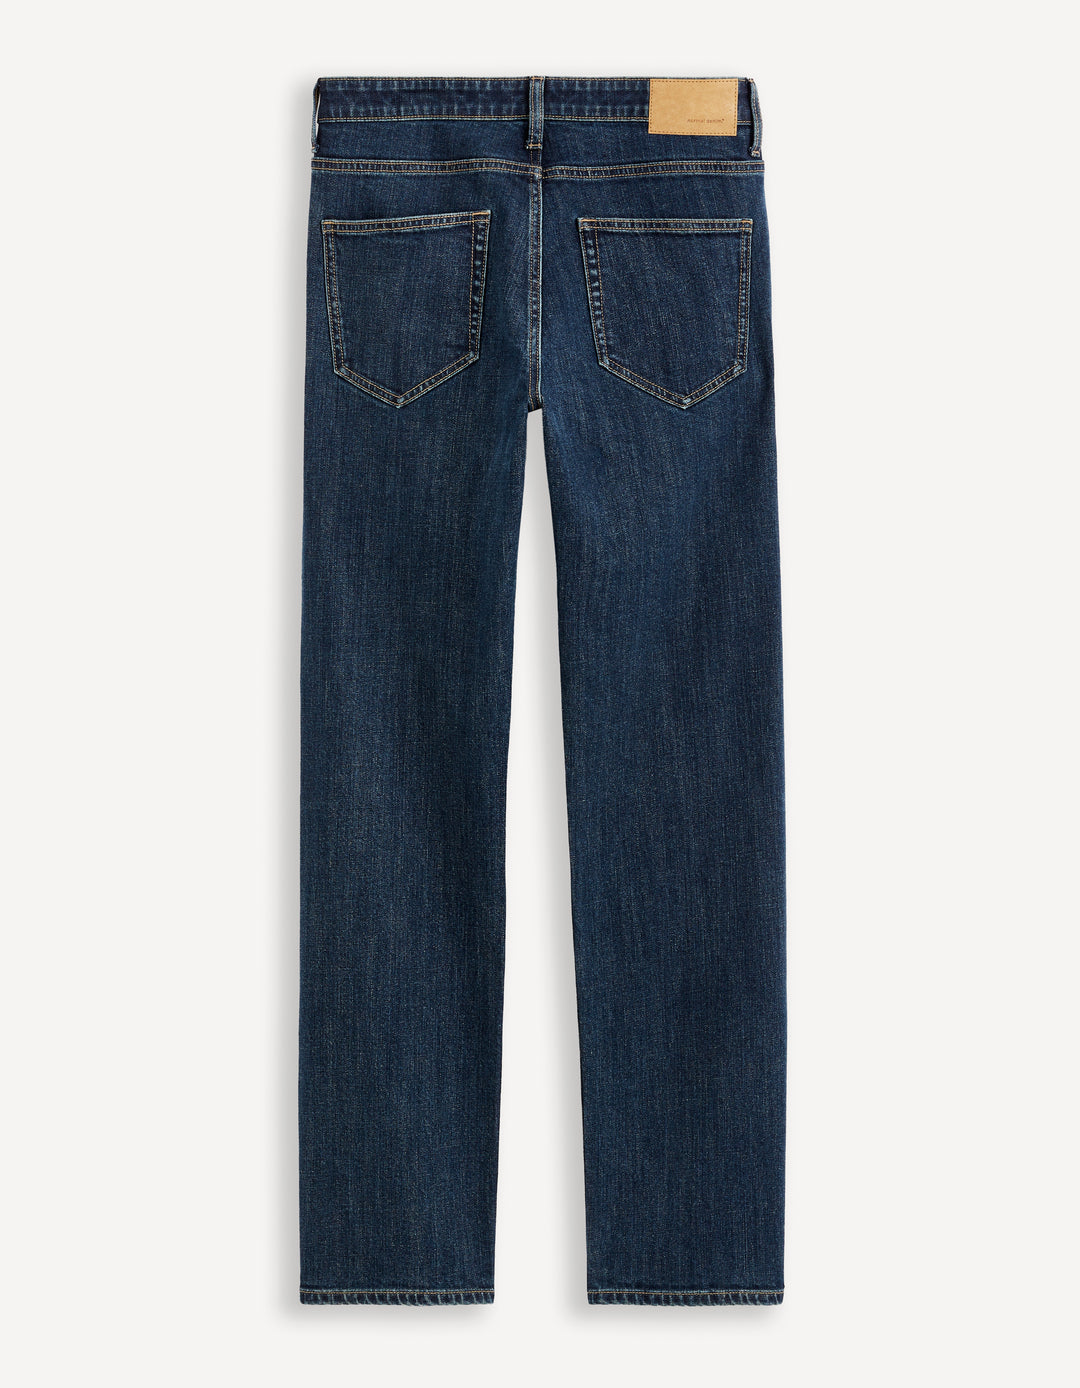 Regular C5 jeans 3 lengths stretch